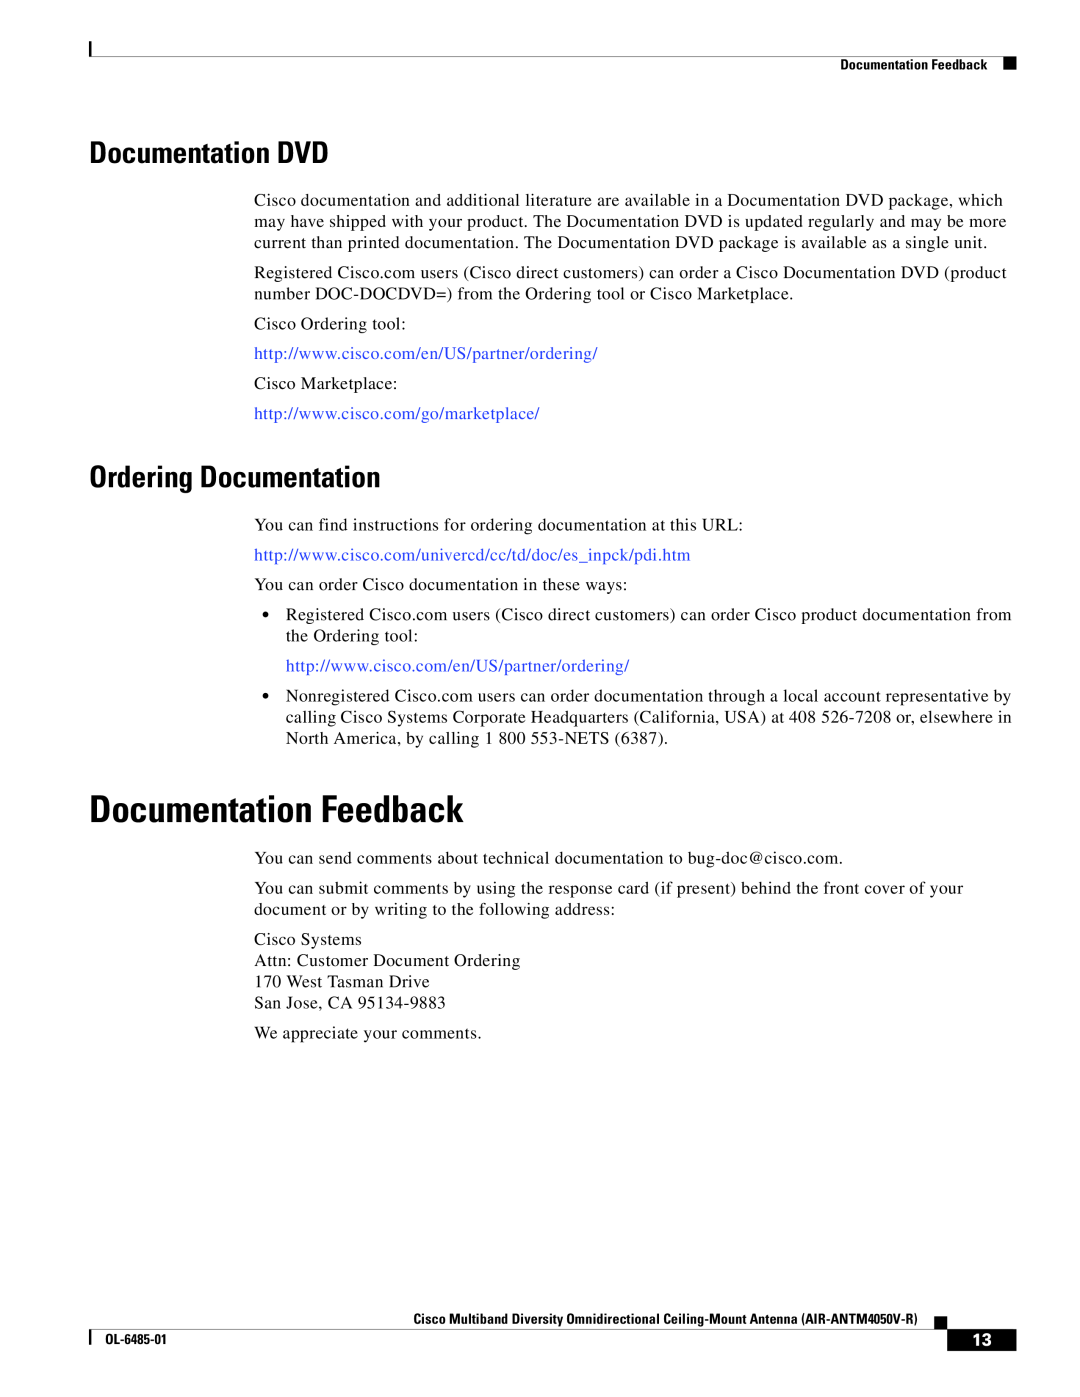 Cisco Systems AIR-ANTM4050V-R warranty Documentation Feedback, Documentation DVD, Ordering Documentation 